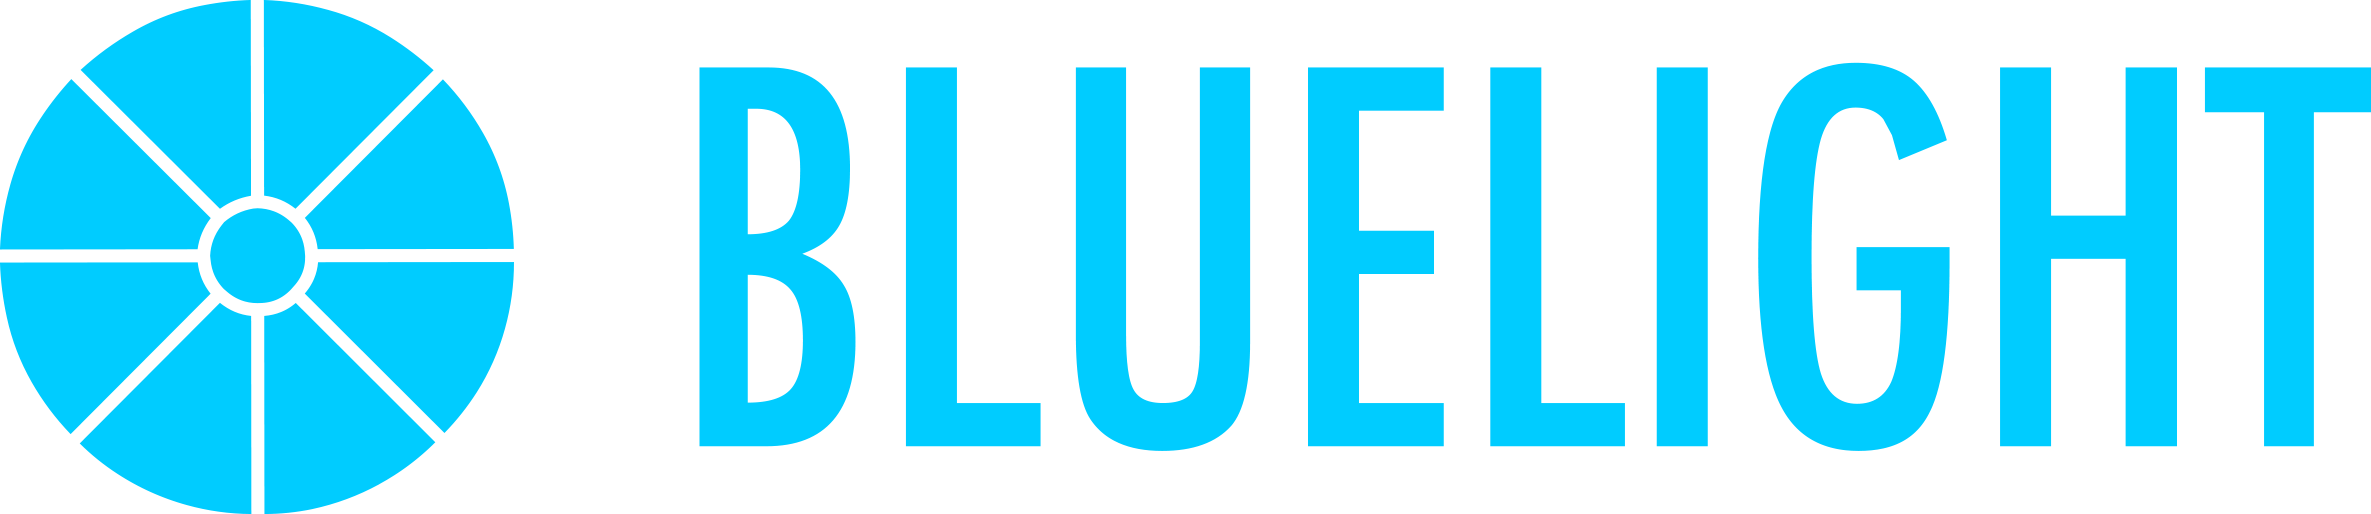 Bluelight logo png